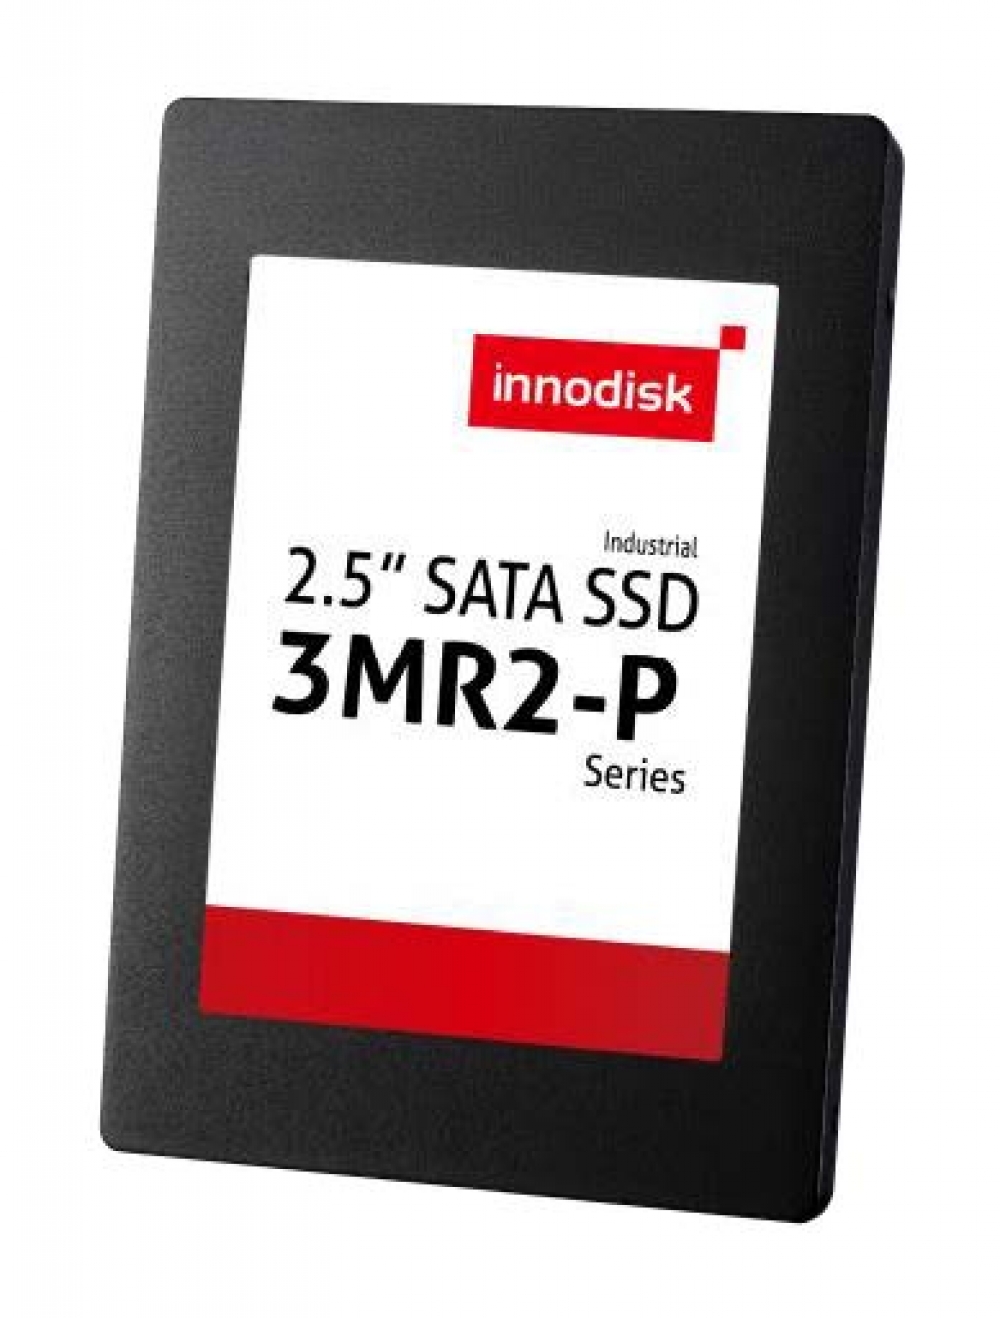 INNODISK 2.5 SATA SSD 3MR2-P